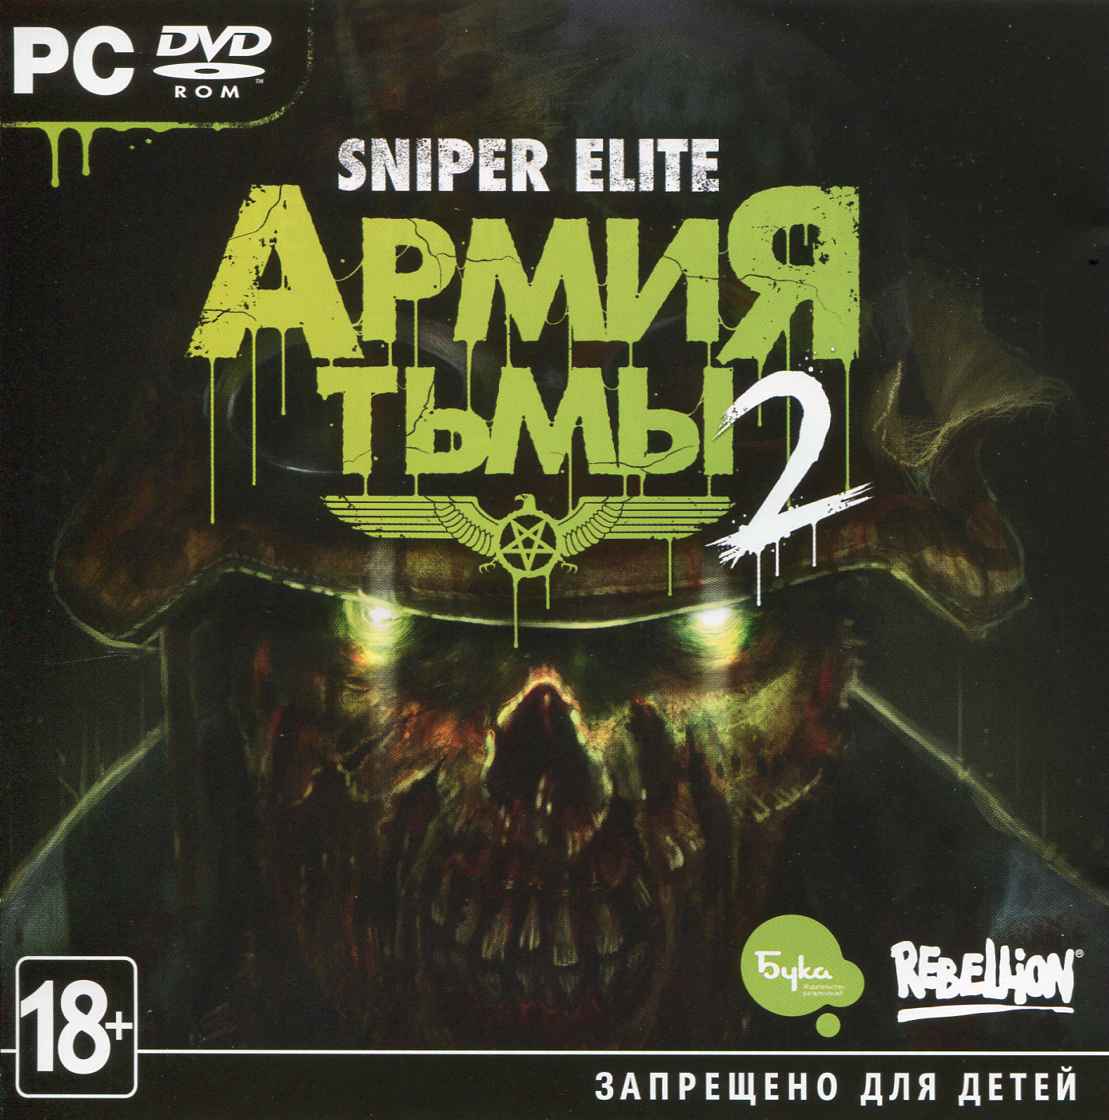 Sniper Elite: Nazi Zombie Army 2 [Армия тьмы 2] (Steam)